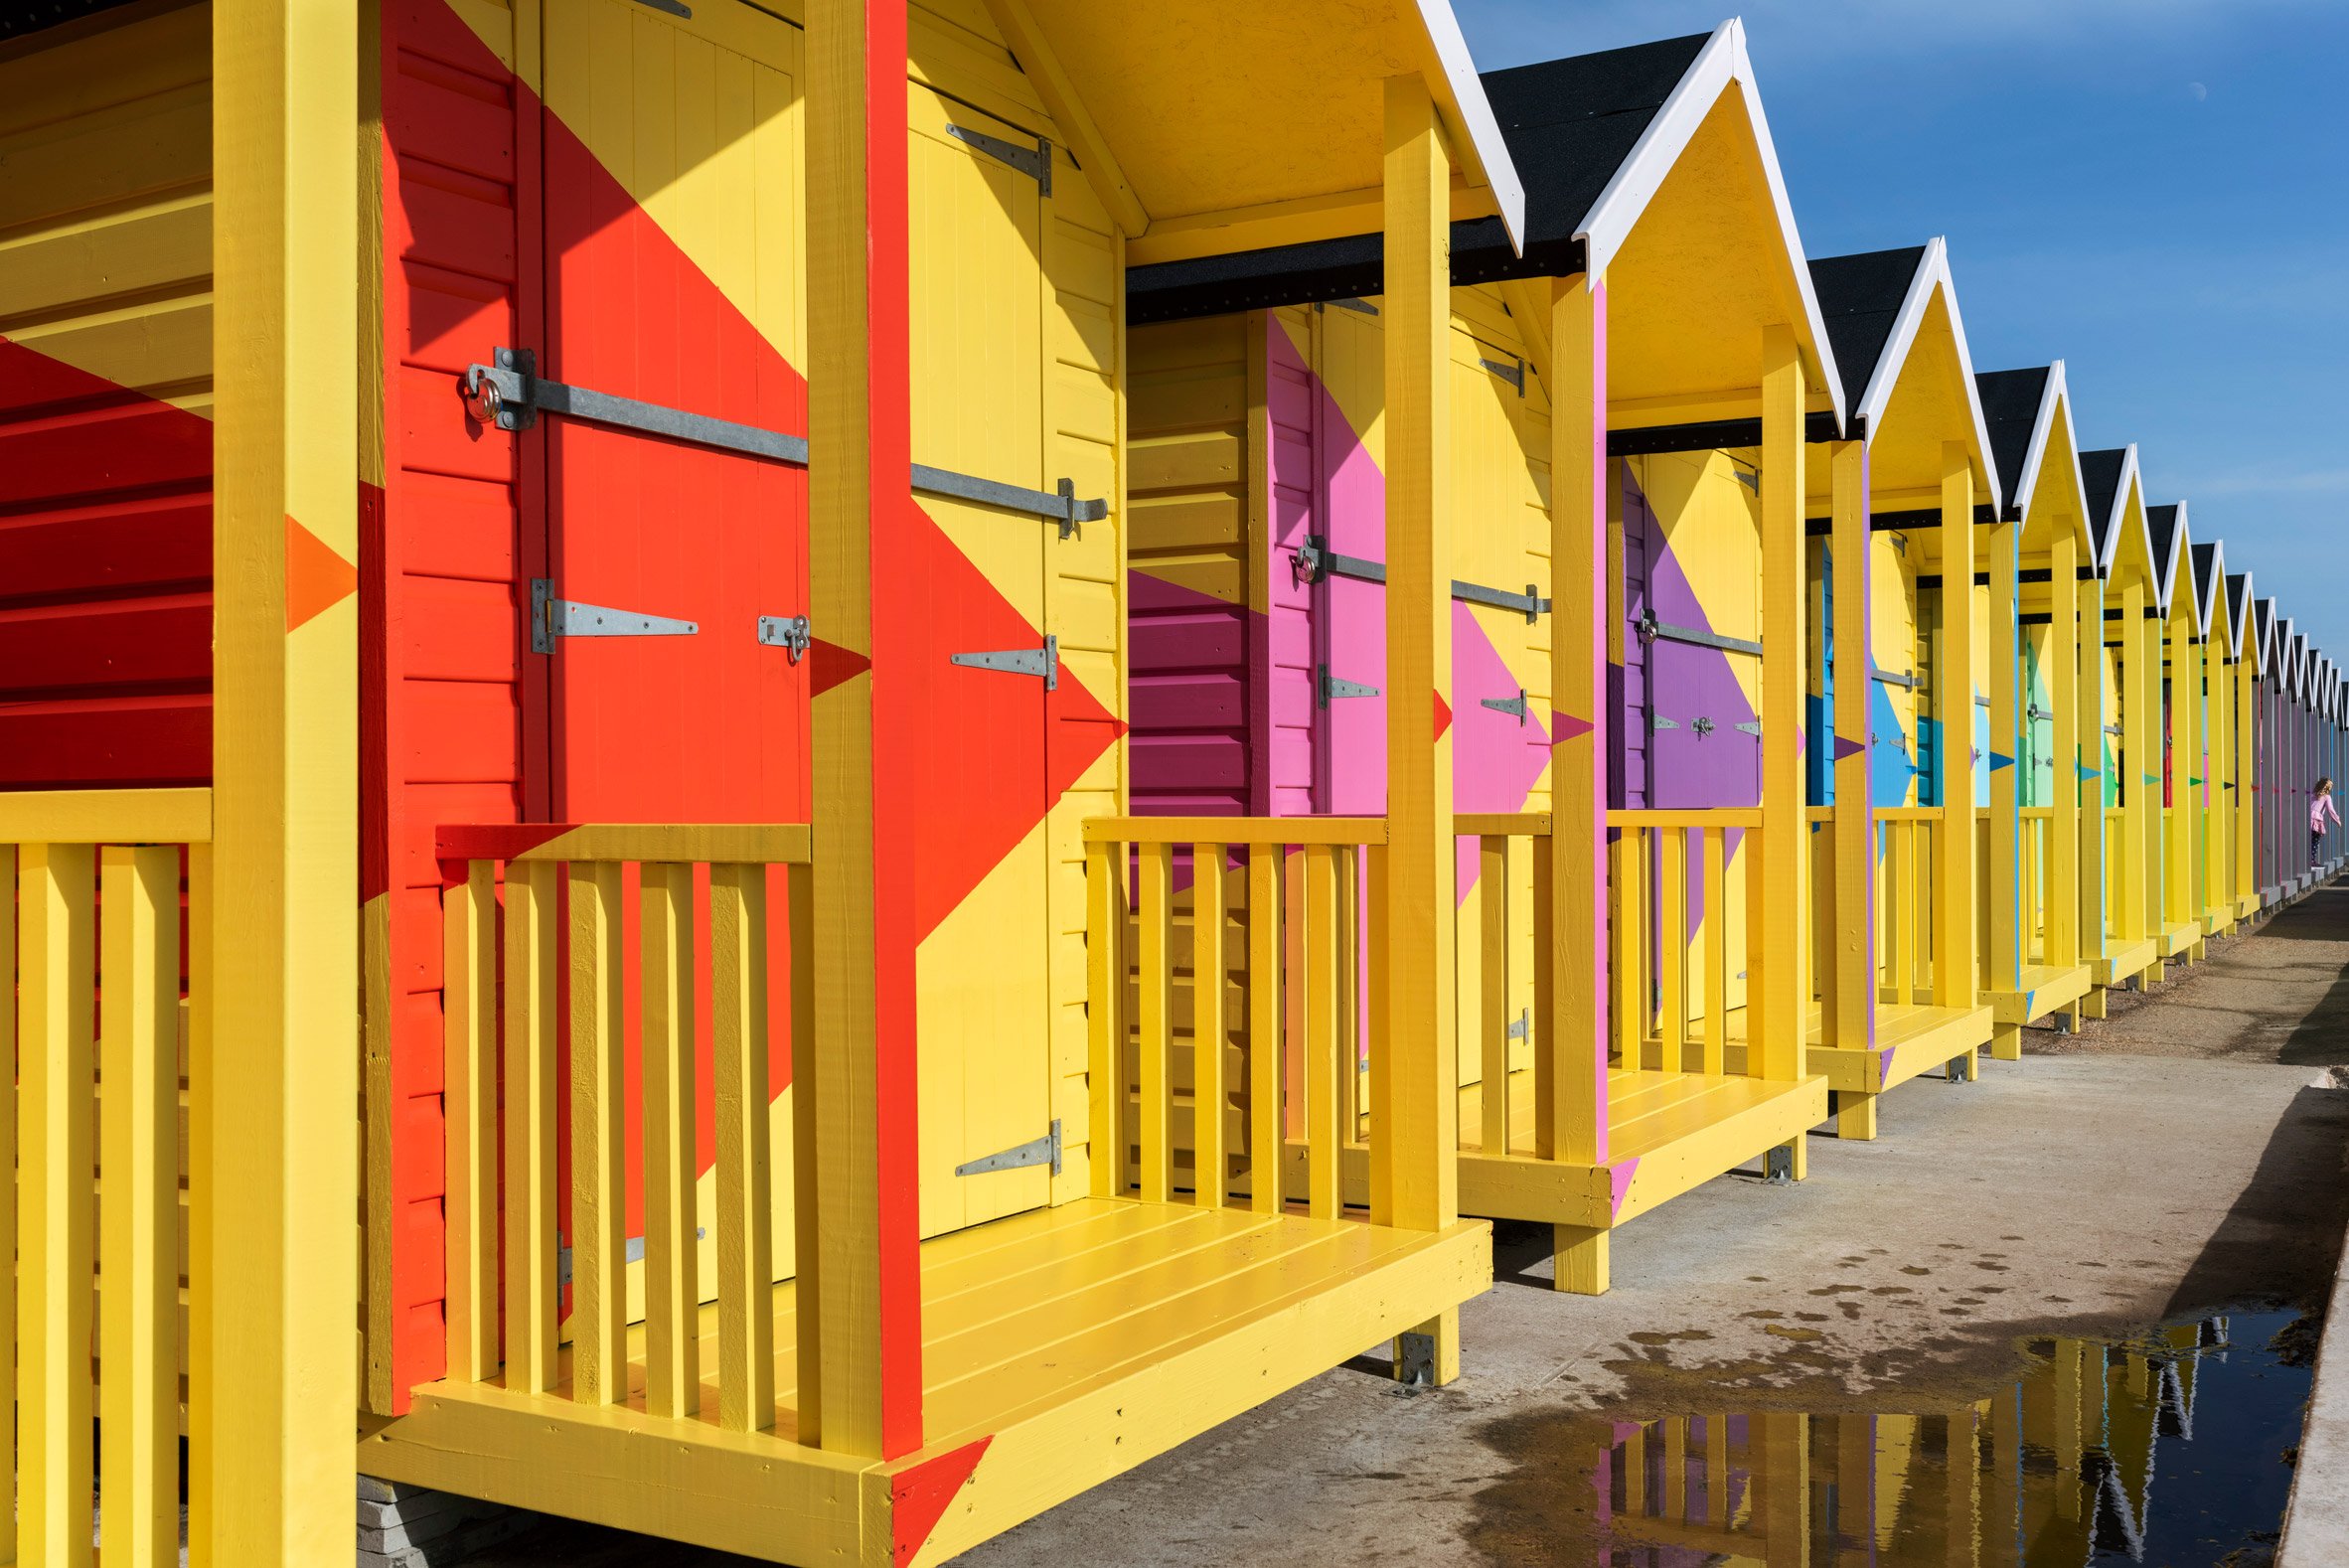 Yellow beach huts with colourful triangles by Rana Begum at Folkestone Triennial 2021